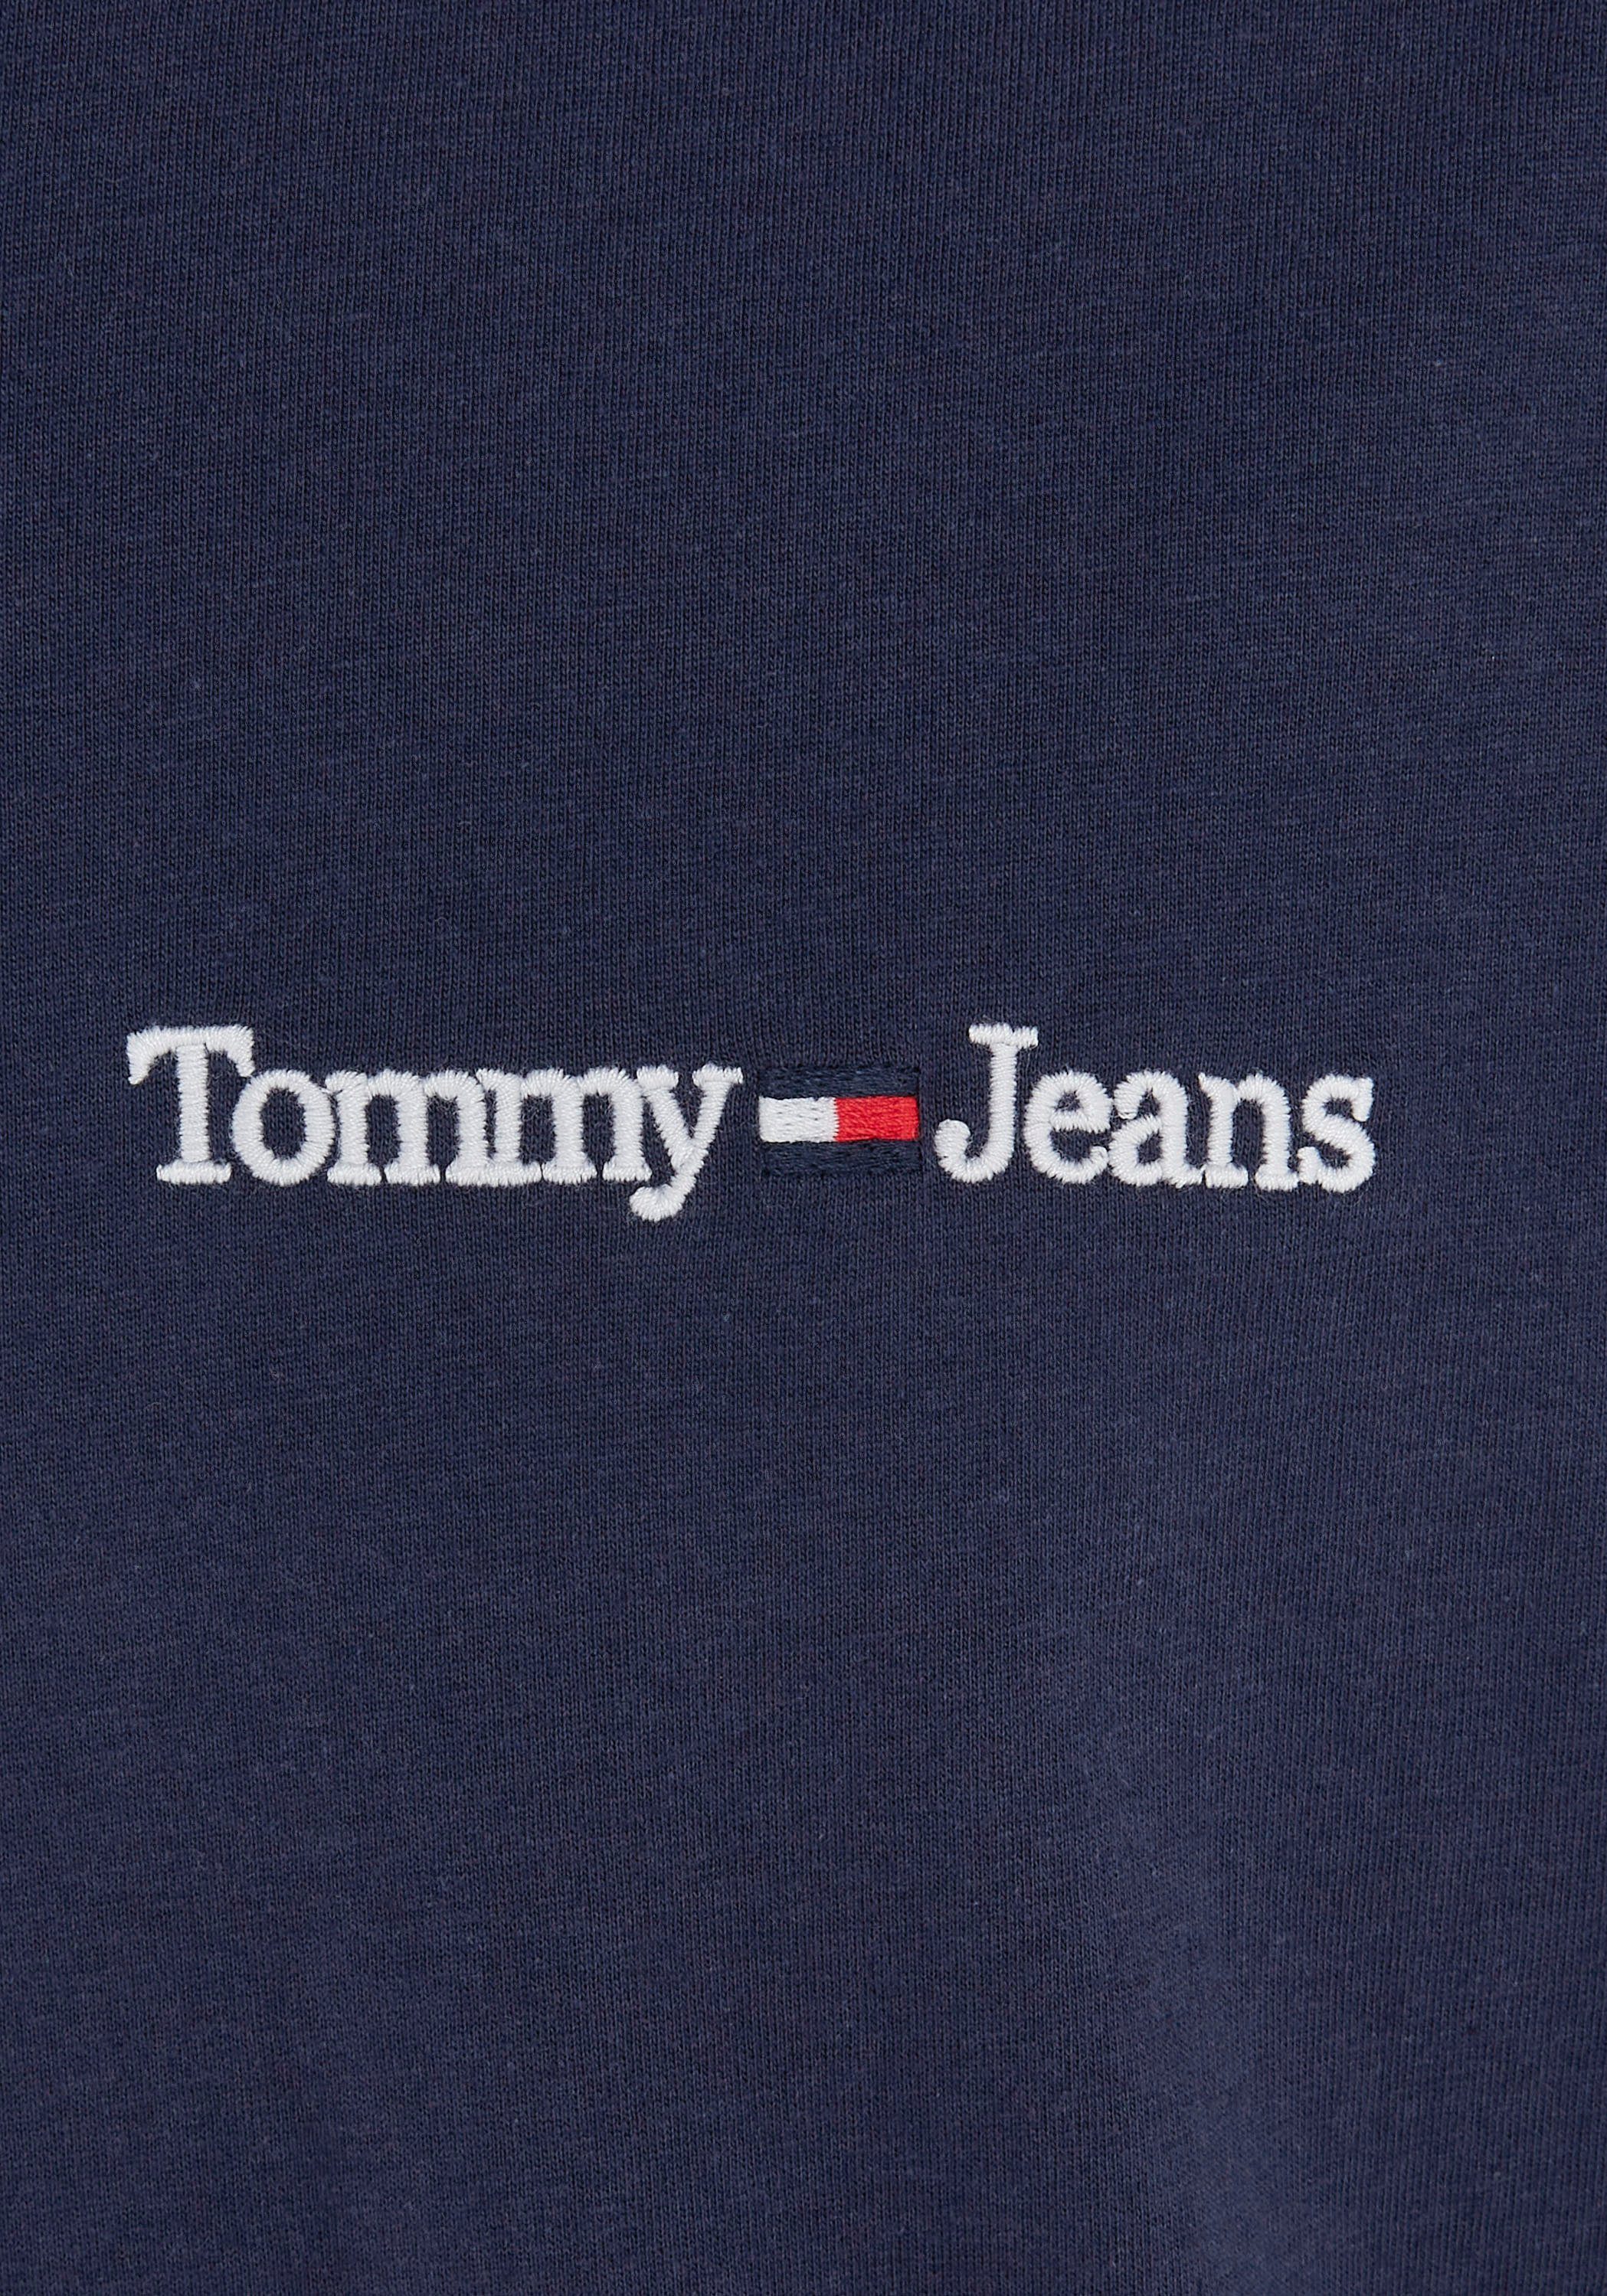 Tommy Jeans T-Shirt LINEAR CLSC TEE Twilight Navy mit CHEST TJM Rundhalsausschnitt